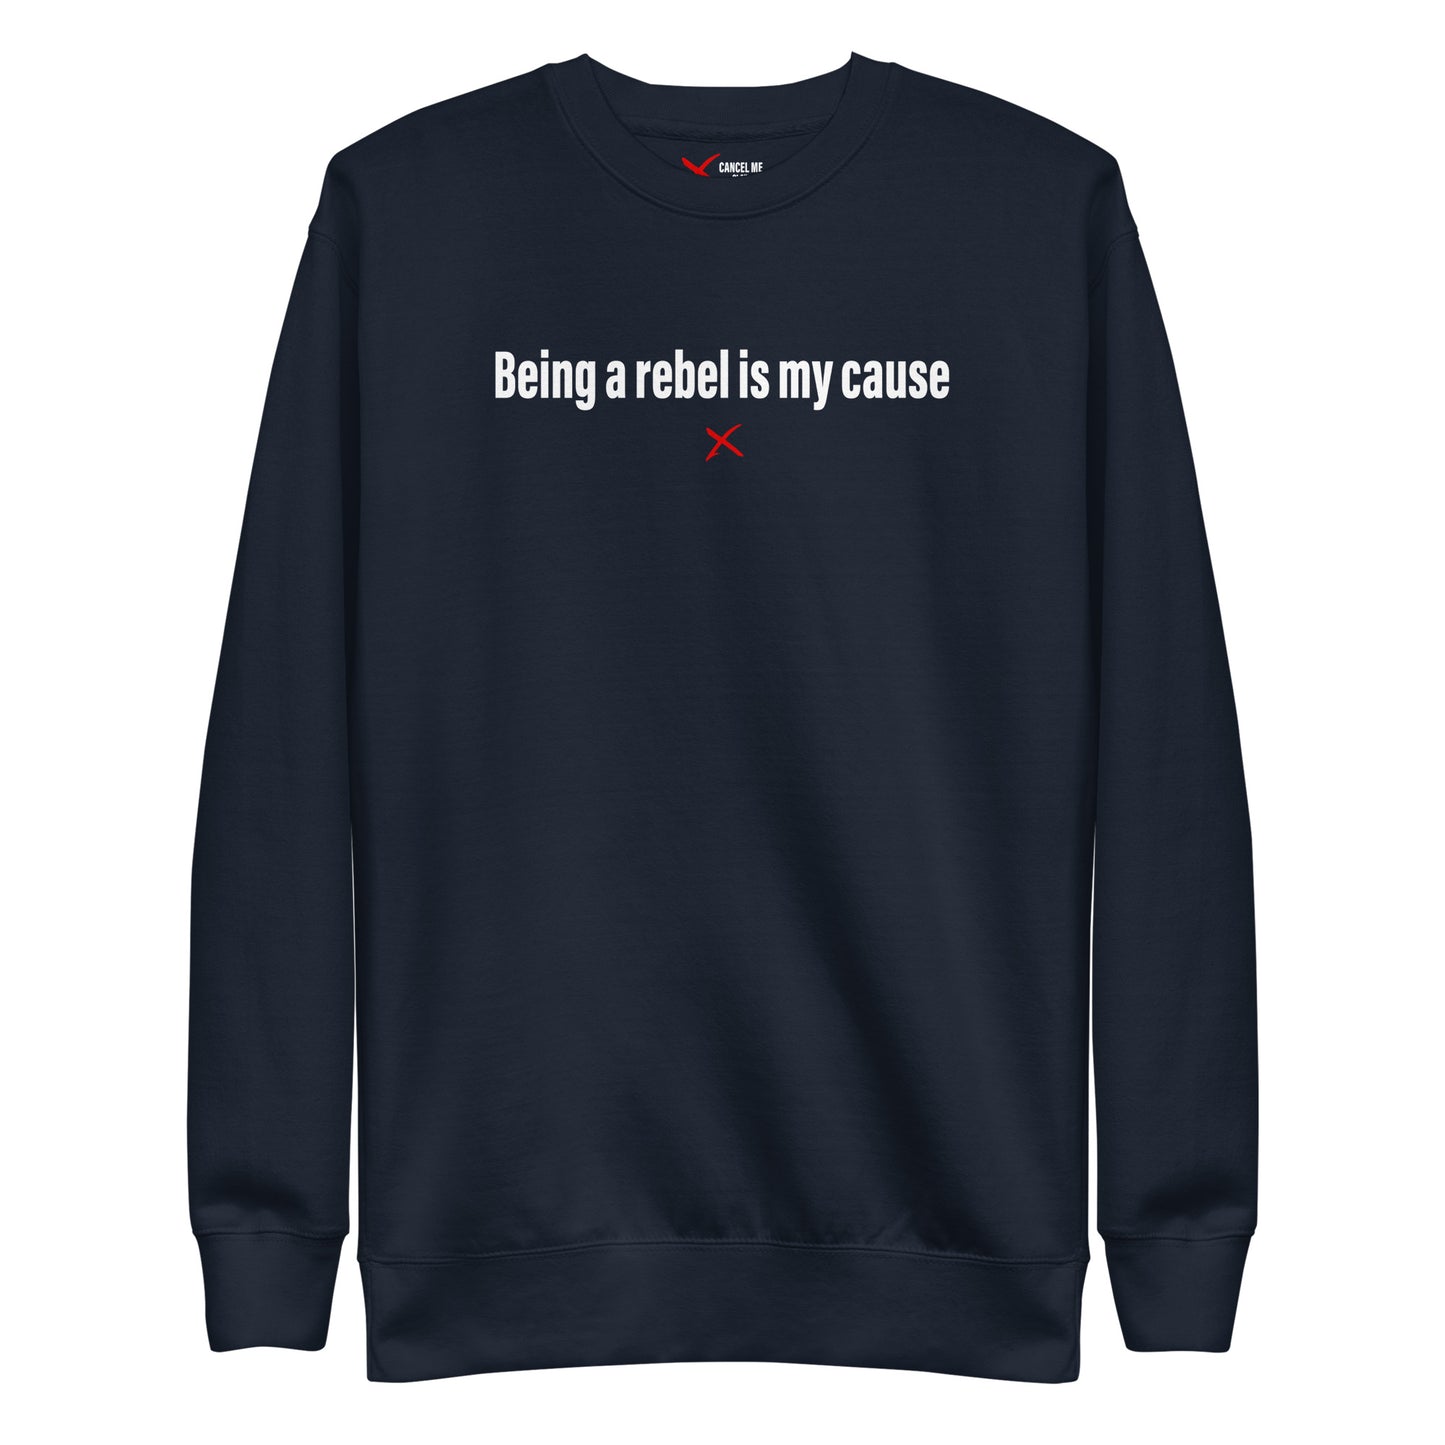 Being a rebel is my cause - Sweatshirt